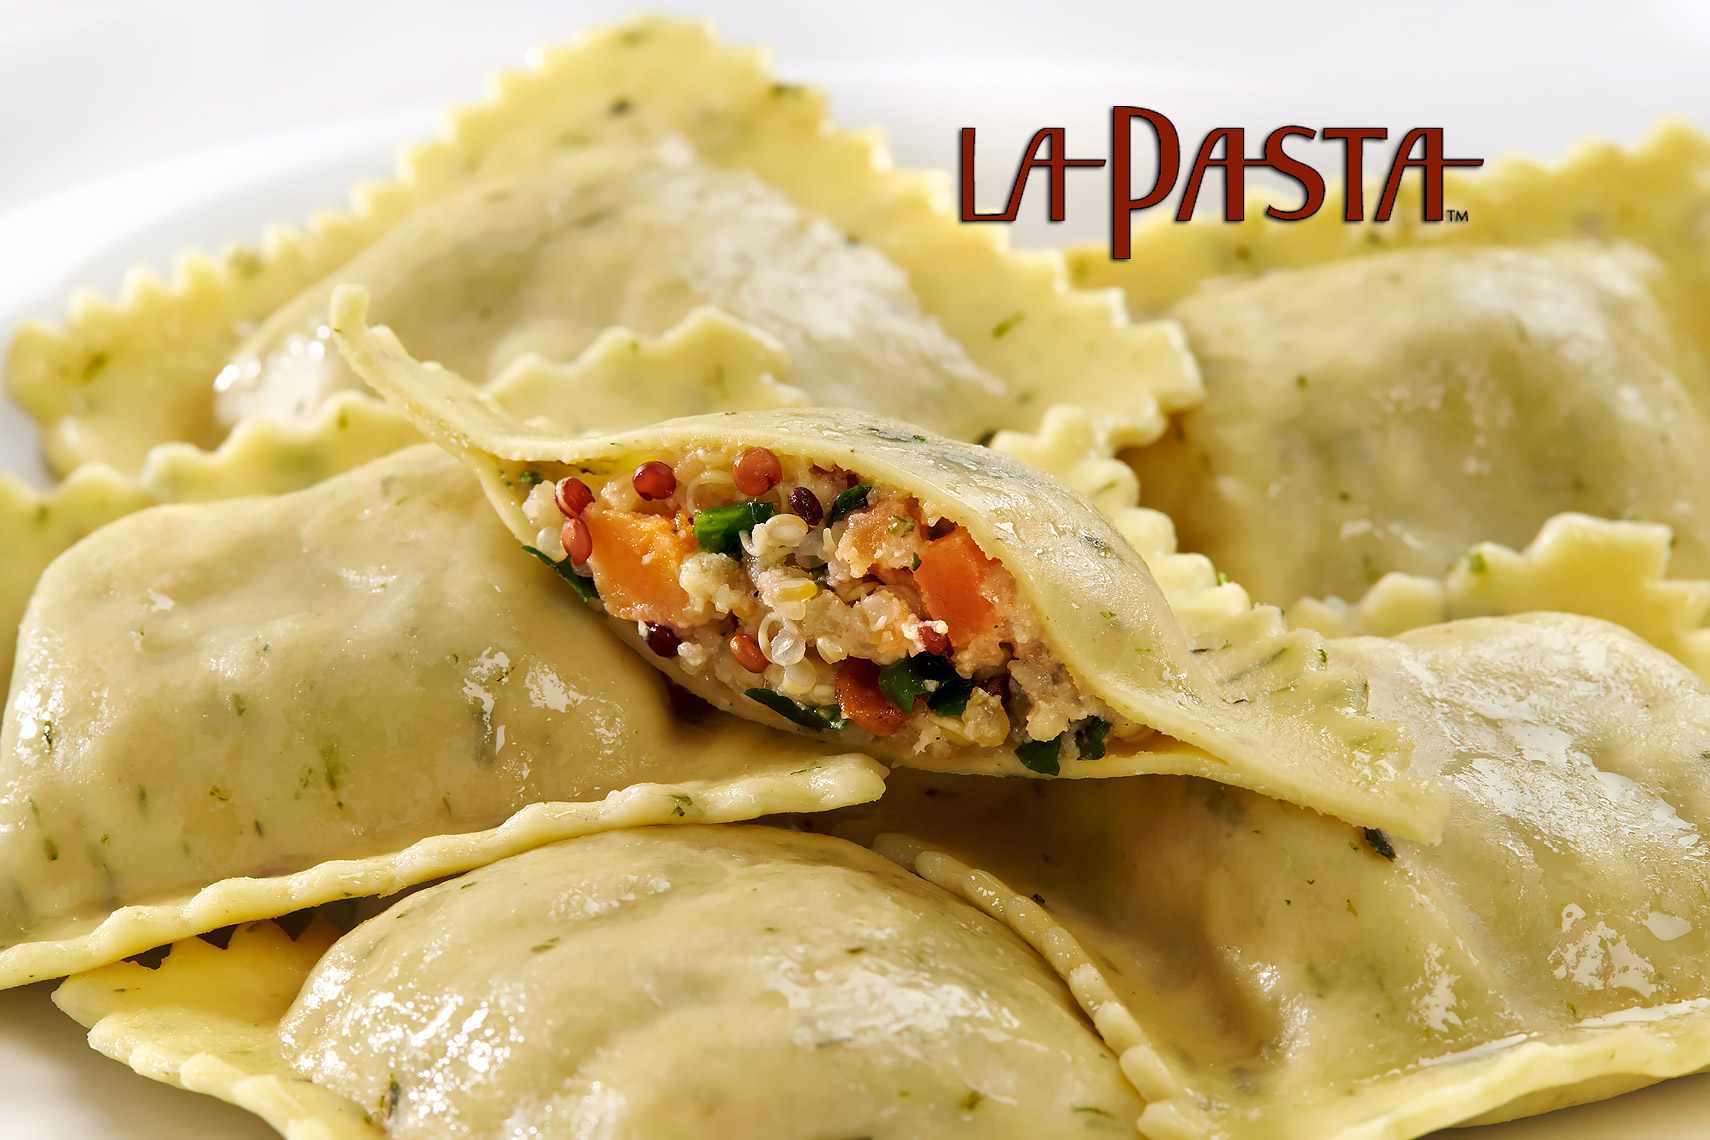 ADVERTISE-Culinary34-La-Pasta